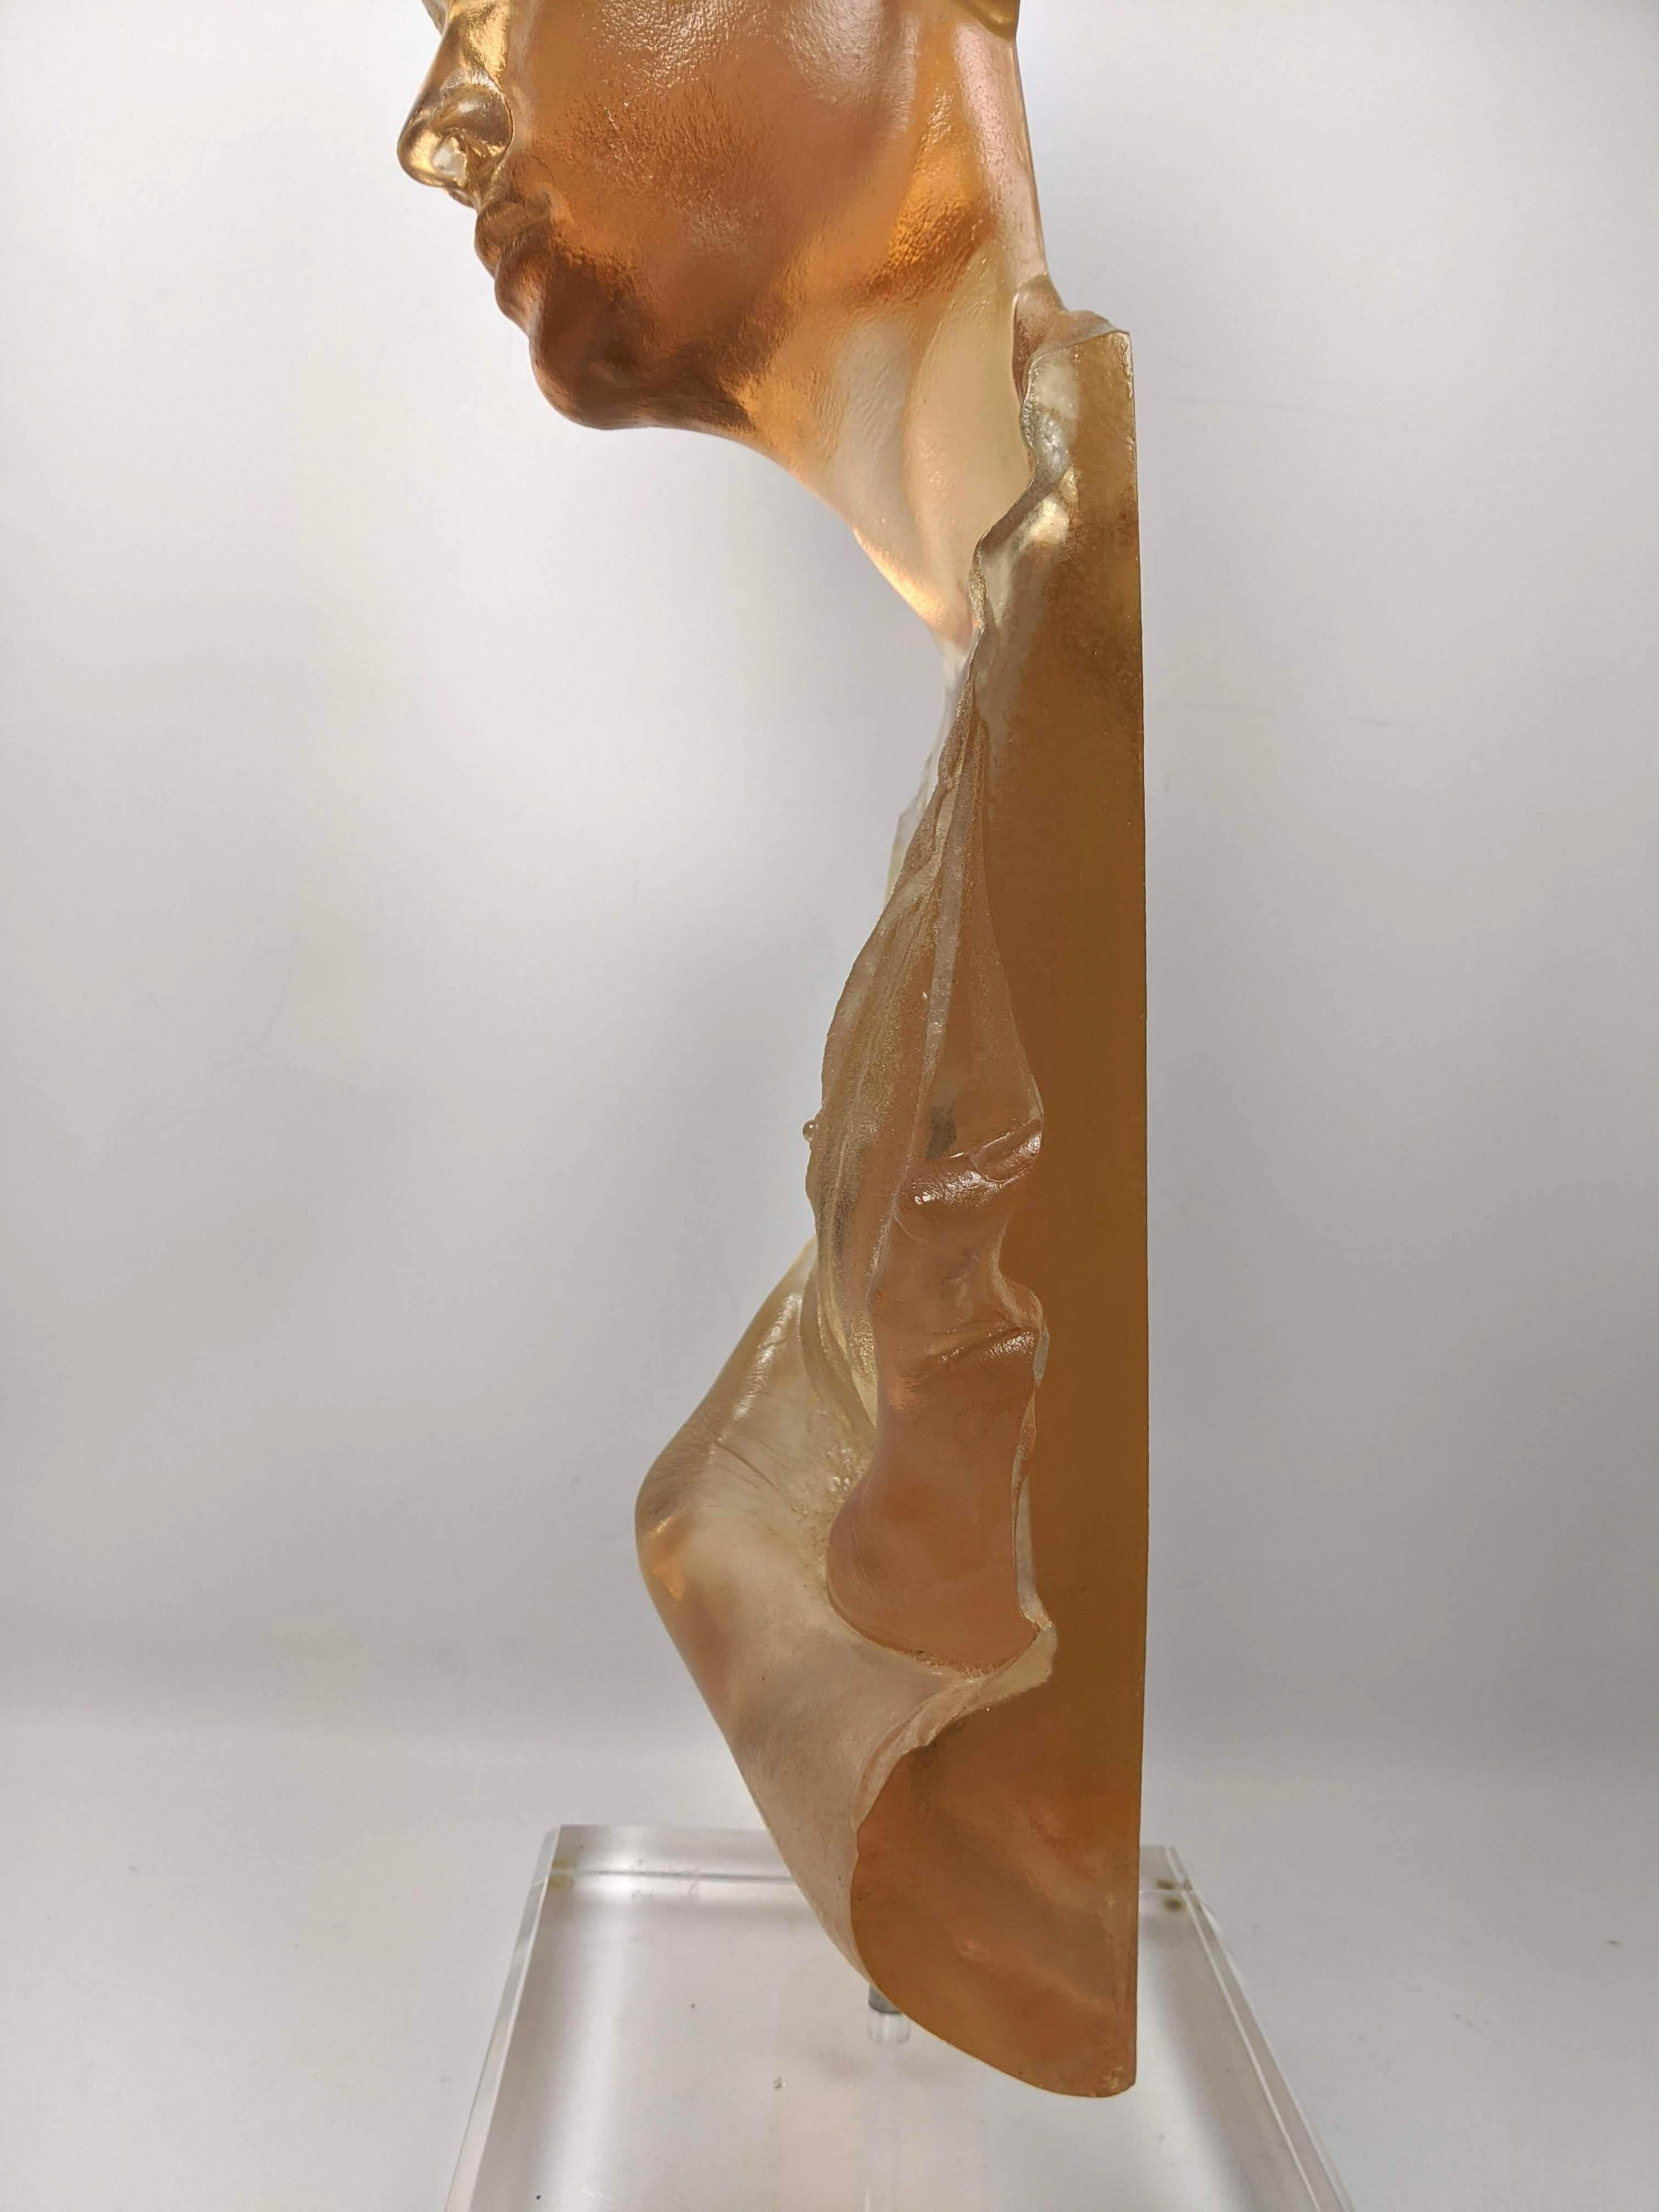 Marc Sijan Hyper Realist Contemporary Cast Acrylic Resin Sculpture Portrait Bust For Sale 4